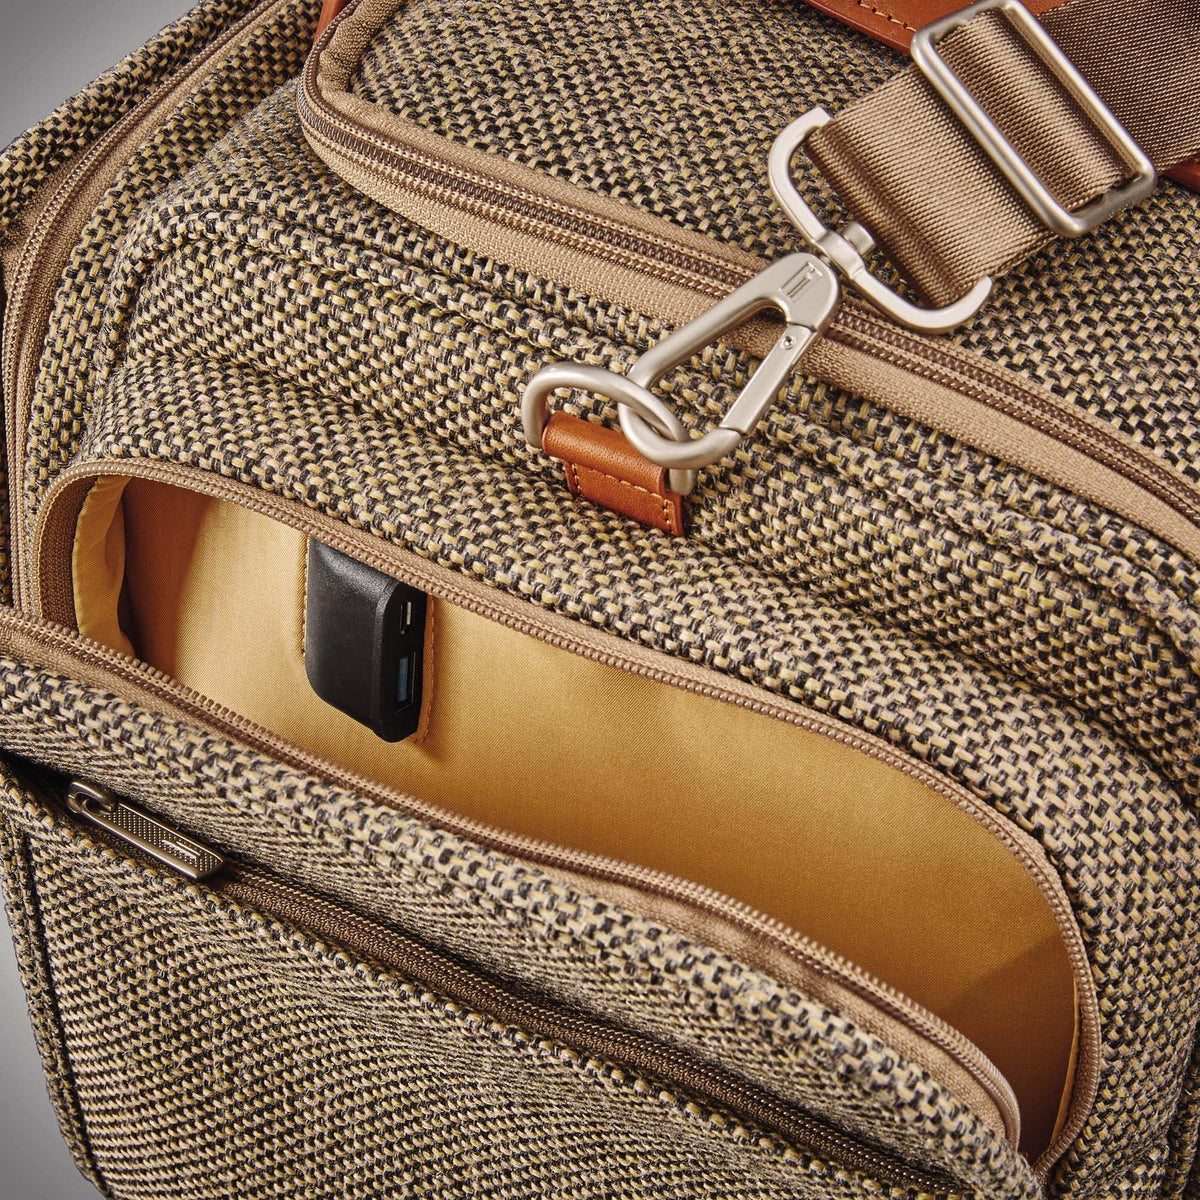 Hartmann Tweed Legend Softside Travel Duffel Bag